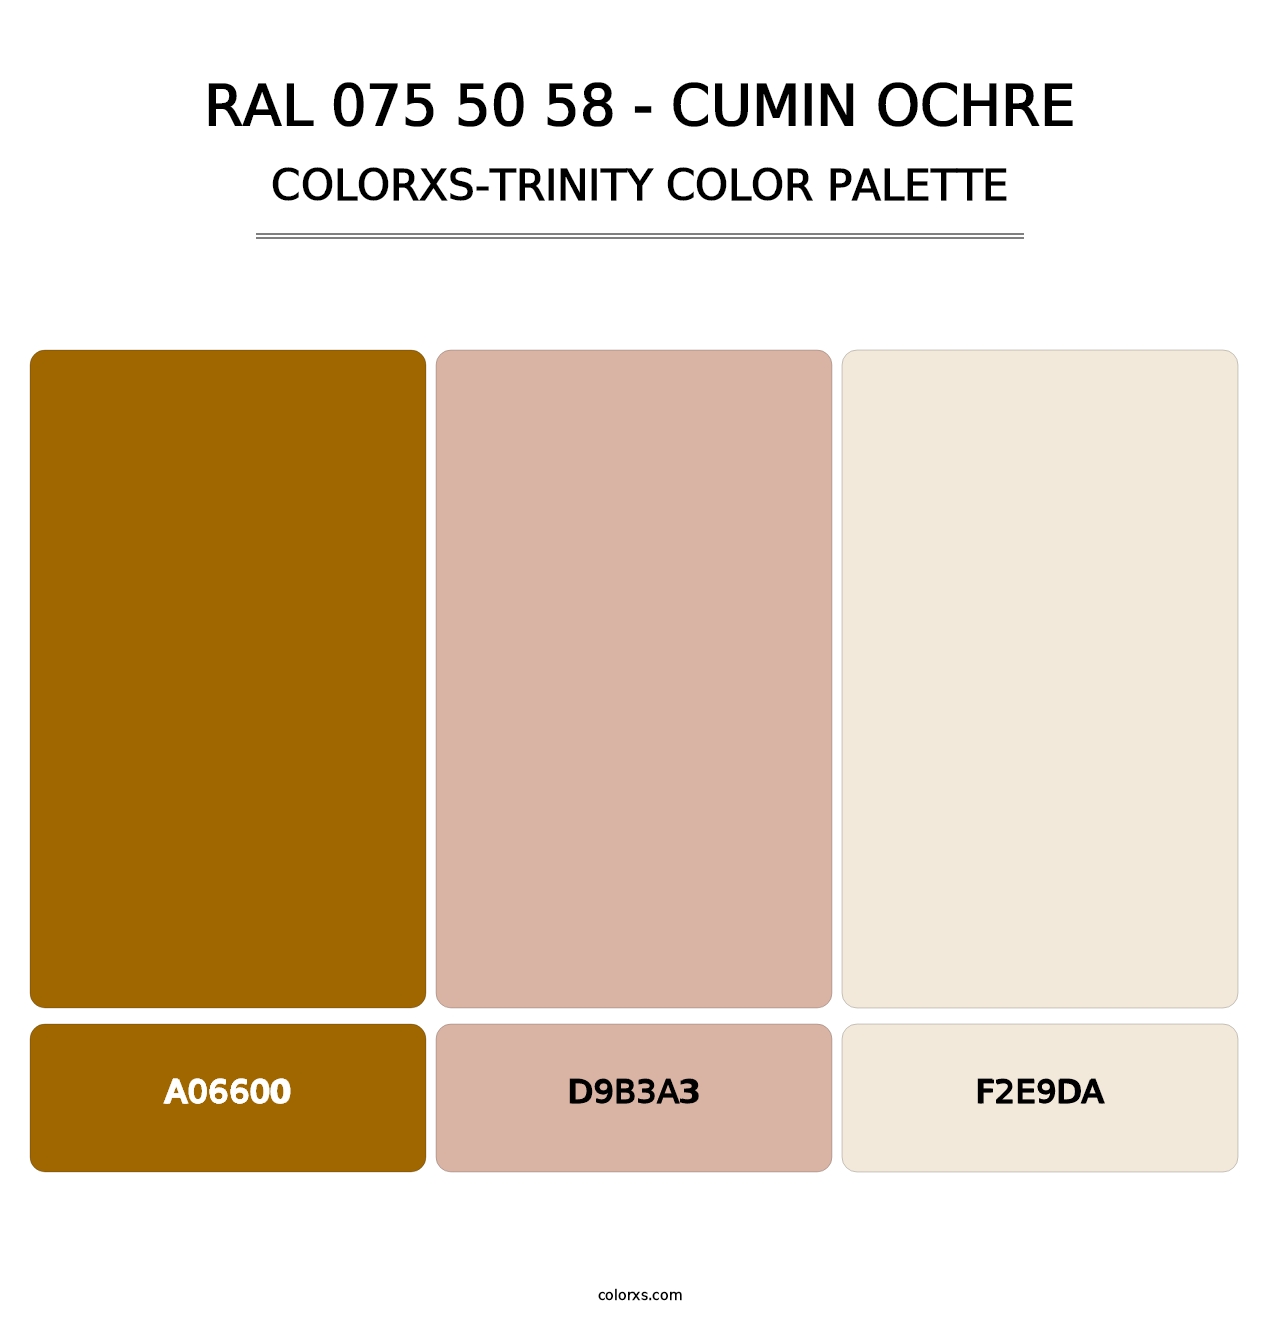 RAL 075 50 58 - Cumin Ochre - Colorxs Trinity Palette